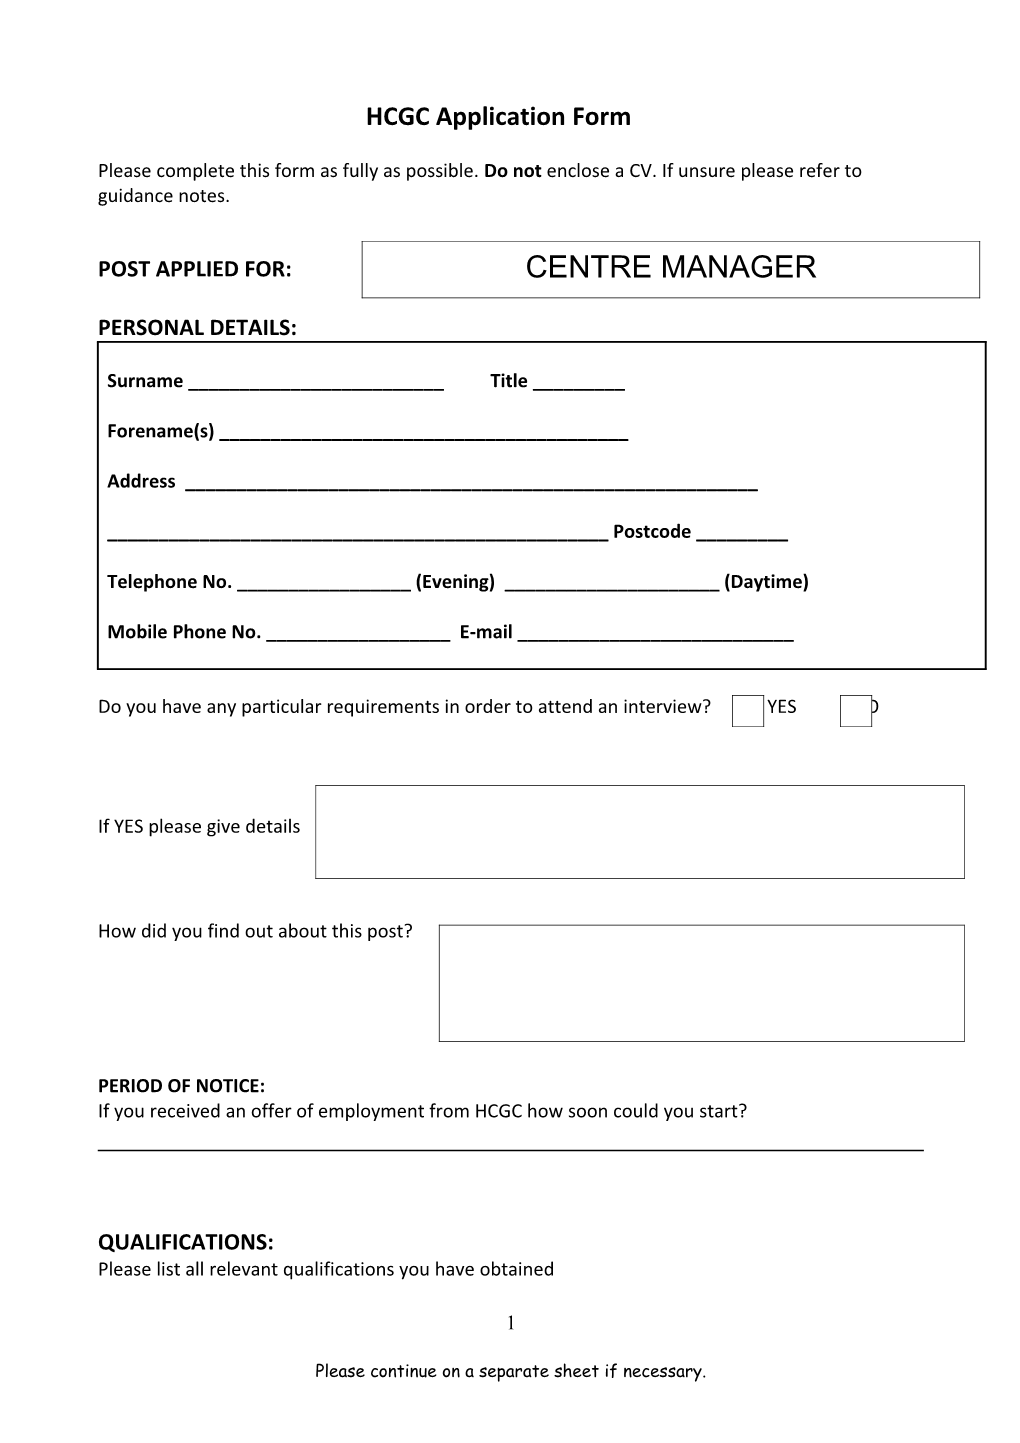 HCGC Application Form